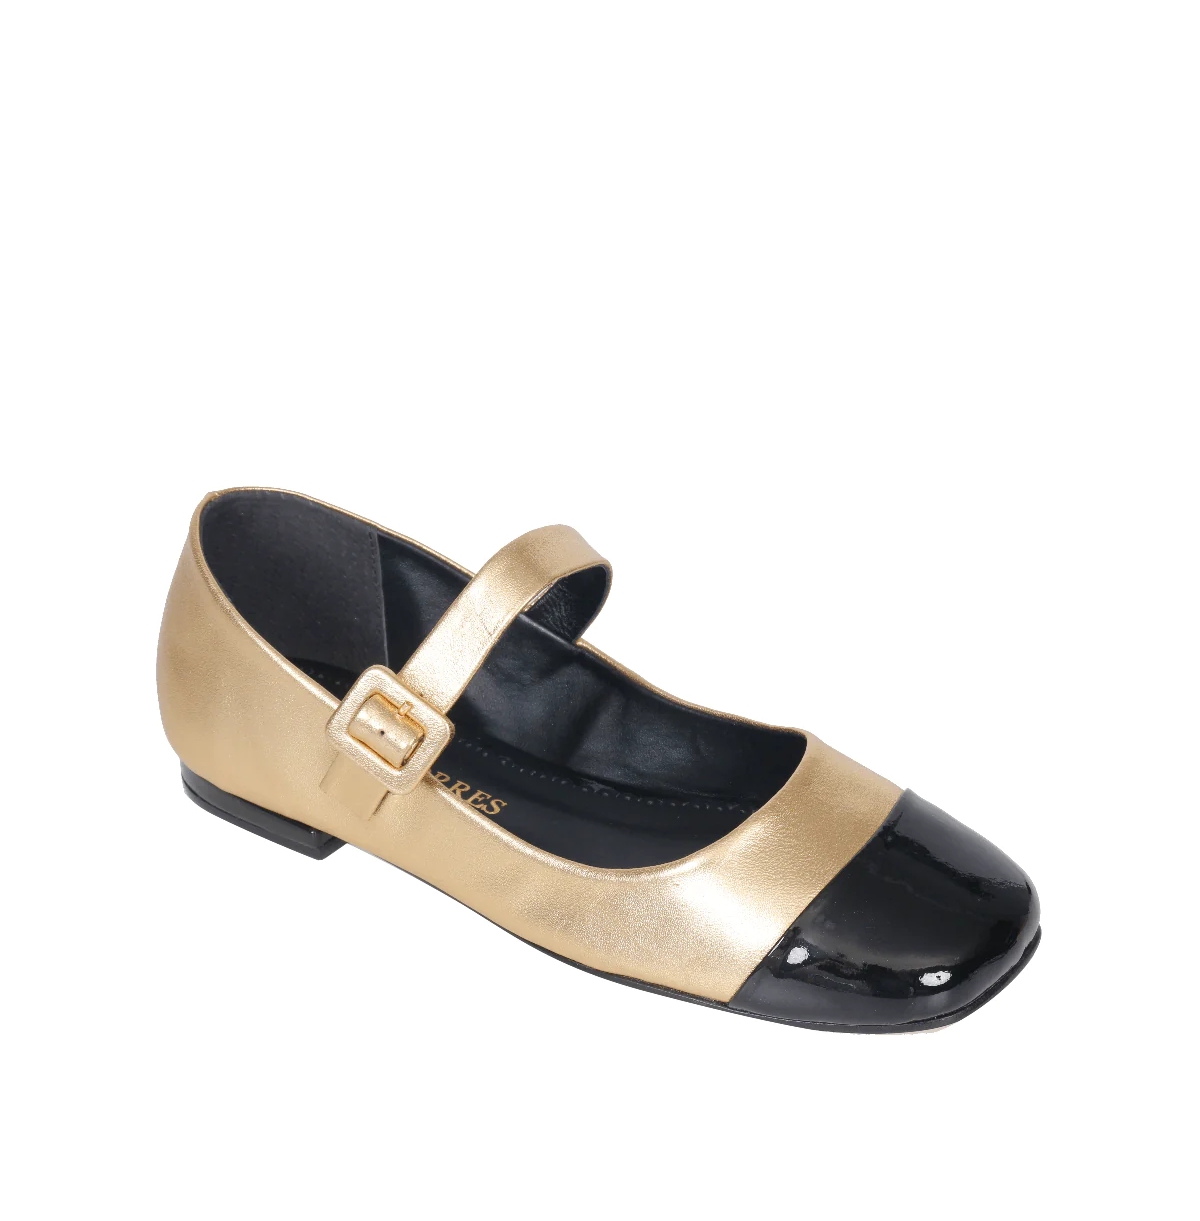 Shoes Women's Olimpia Mary Jane Flats - Gold